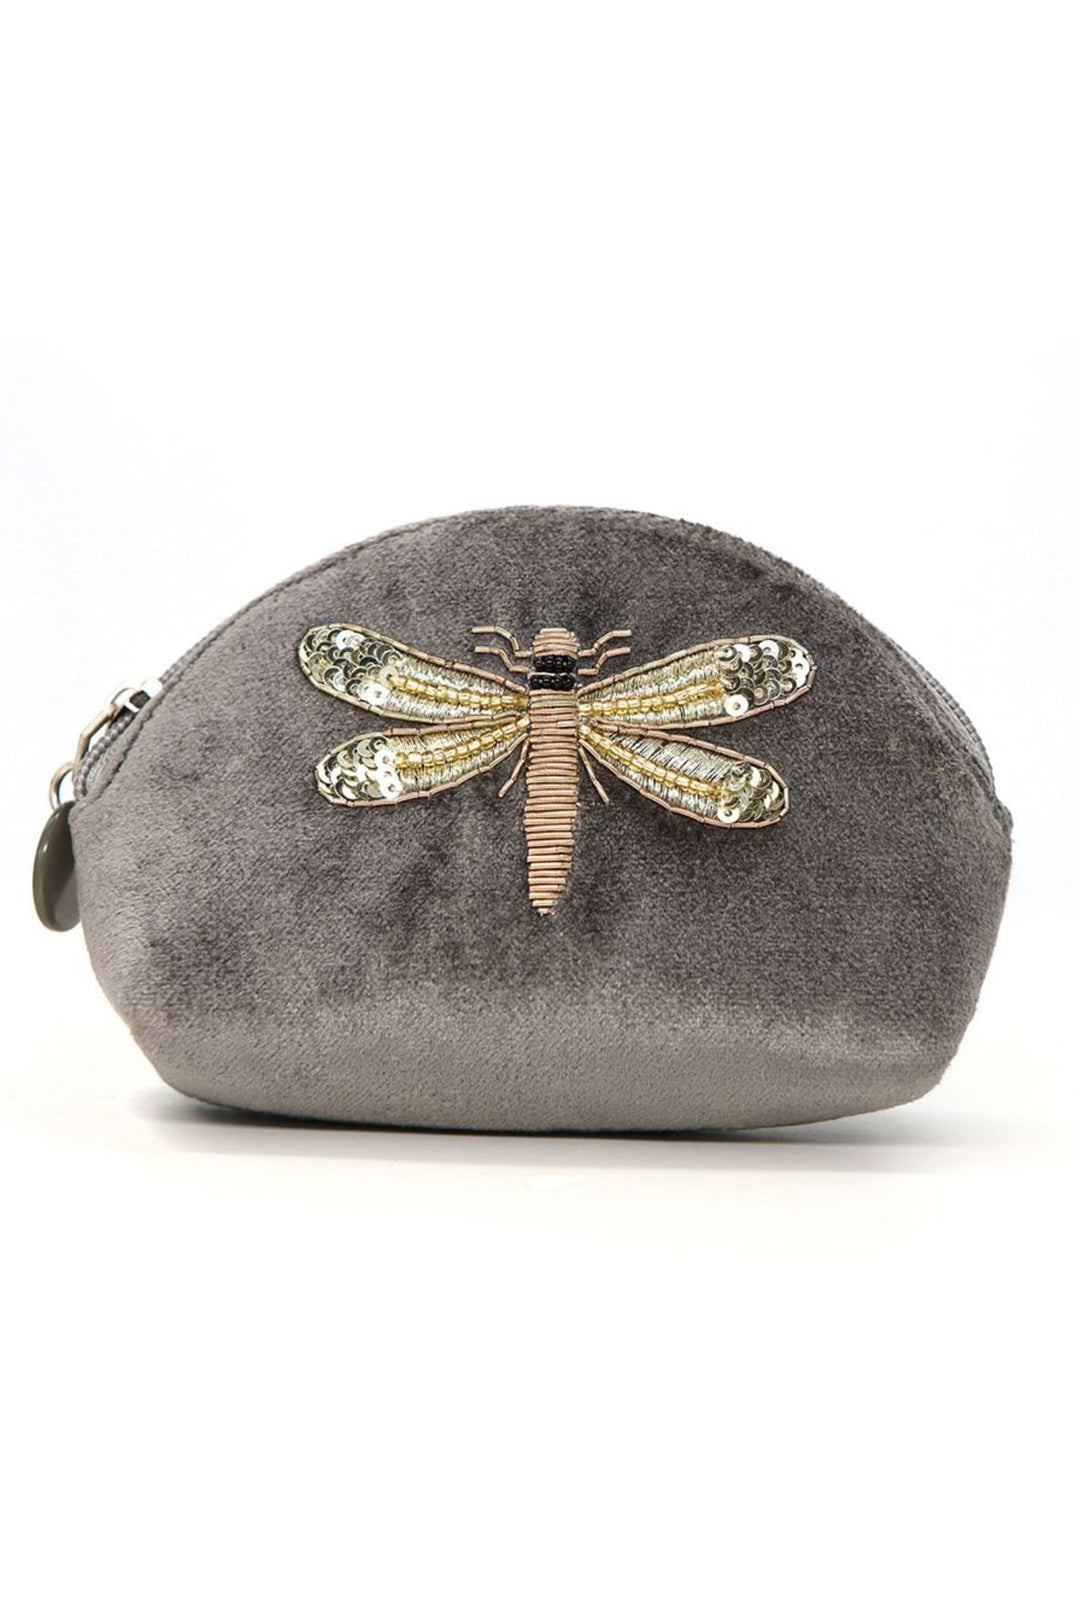 POM Embroidered Dragonfly Velvet Coin Purse - Sugarplum Boutique